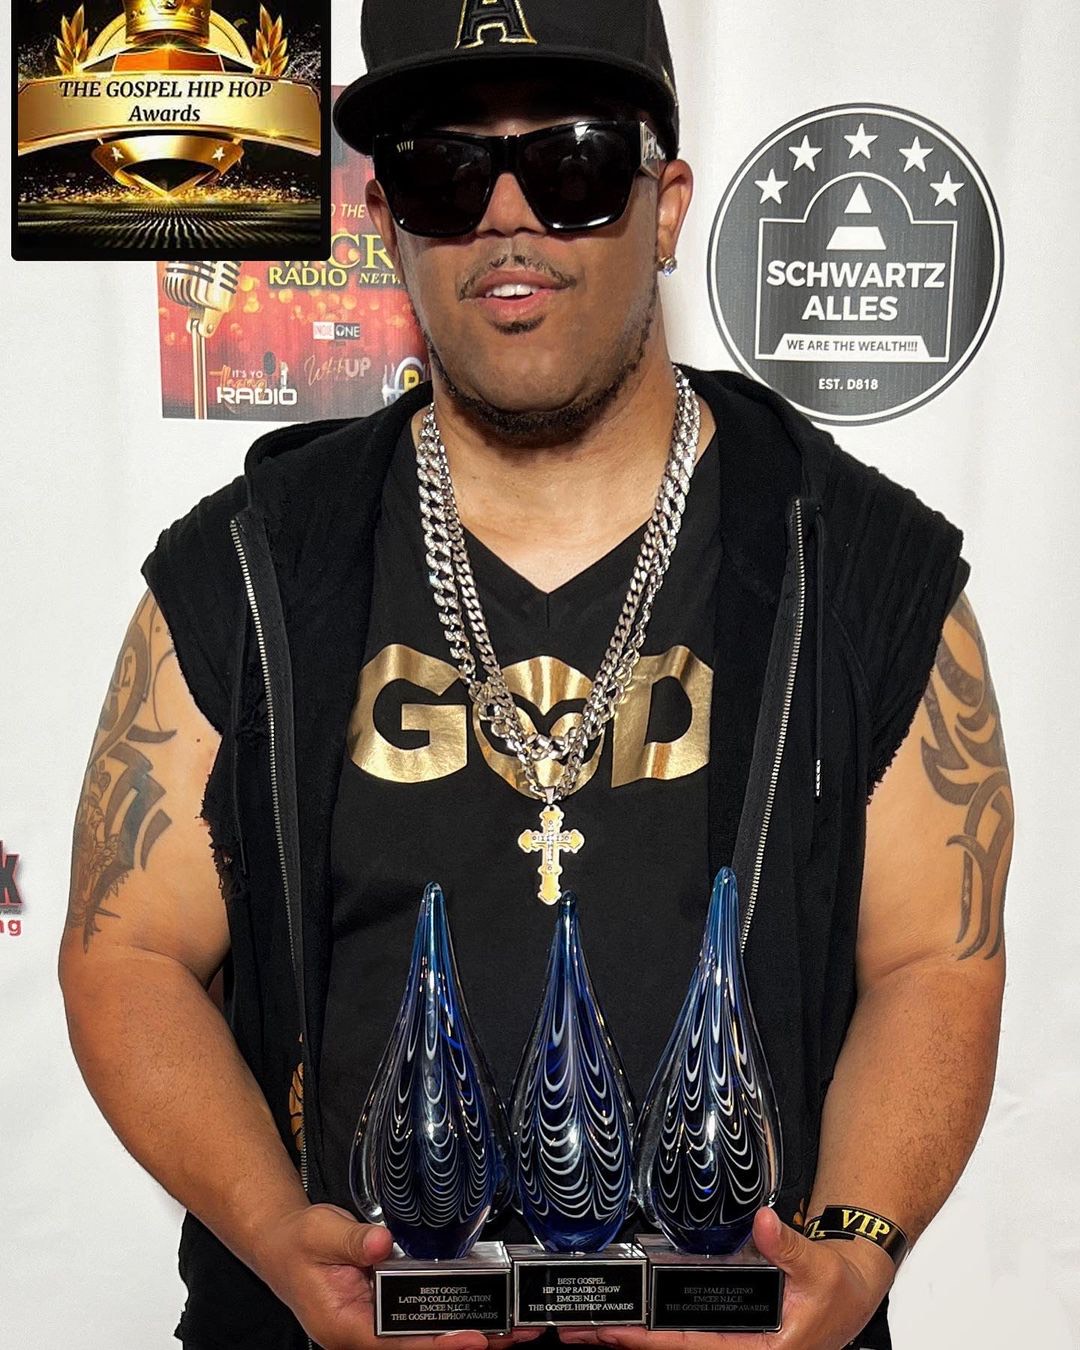 Christian hip-hop Artist, Producer Emcee N.I.C.E. nets Three Gospel Hip Hop Awards